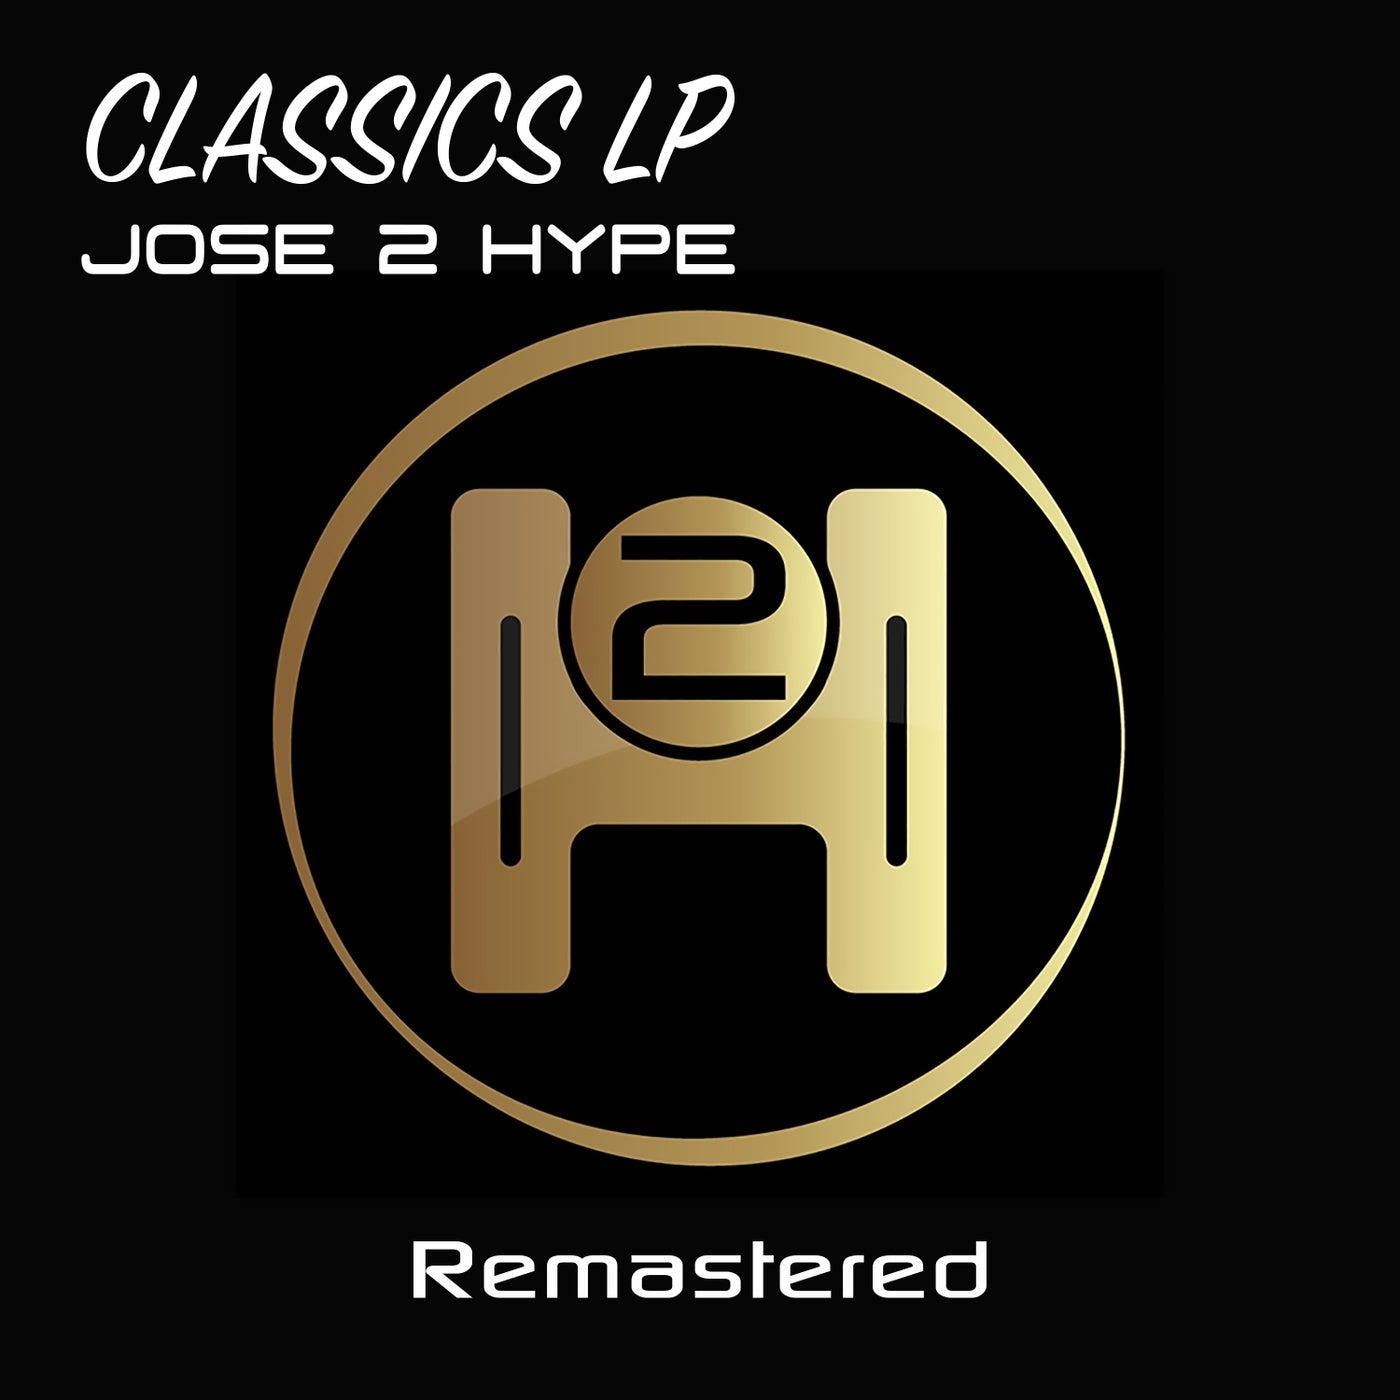 CLASSICS LP (Remastered)